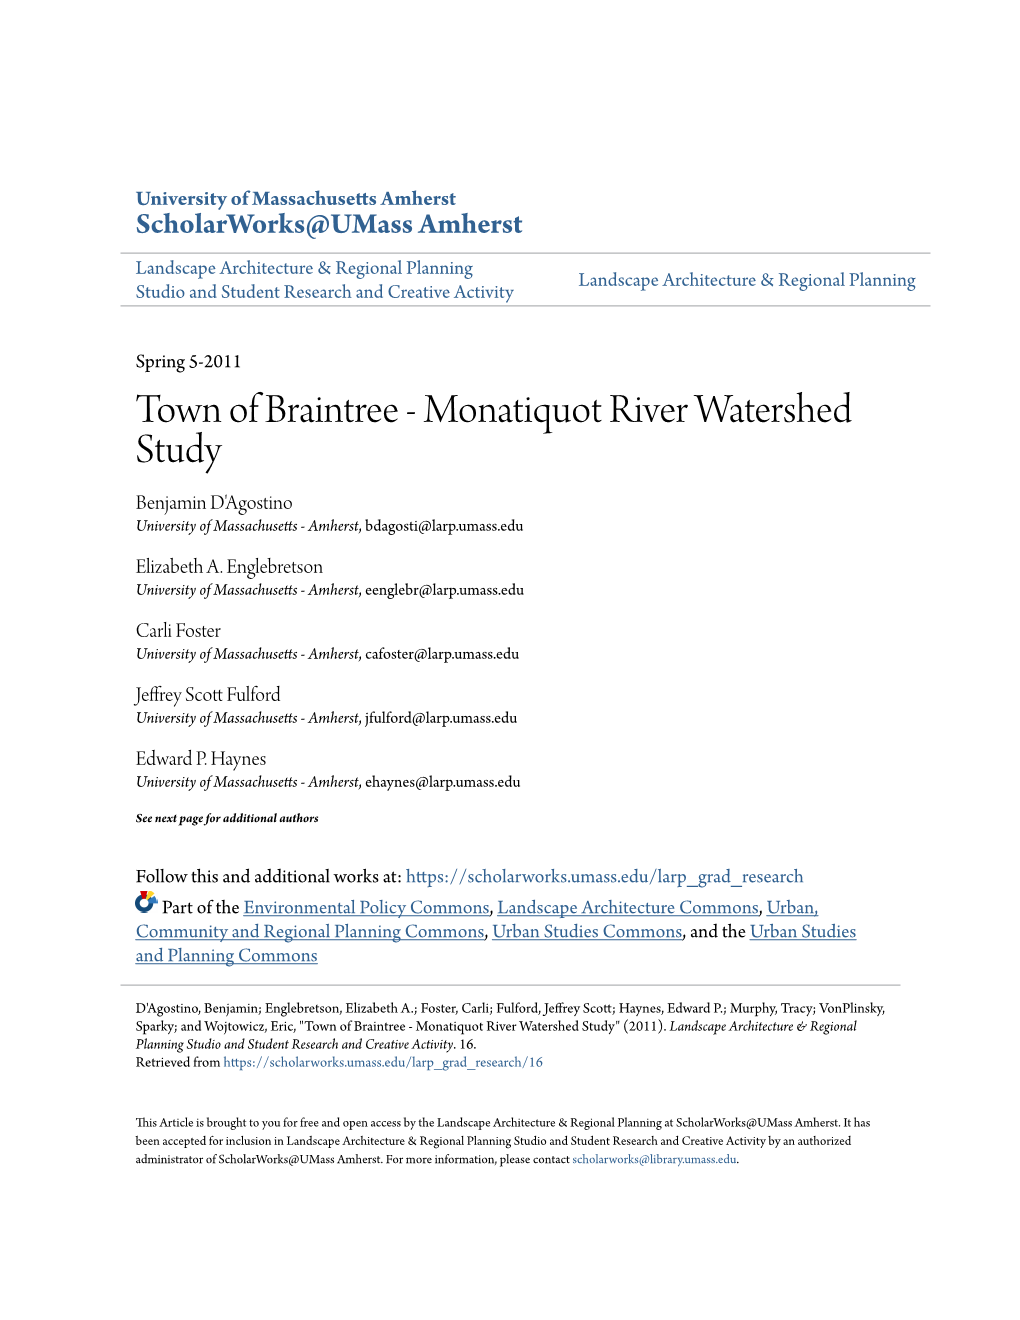 Monatiquot River Watershed Study Benjamin D'agostino University of Massachusetts - Amherst, Bdagosti@Larp.Umass.Edu